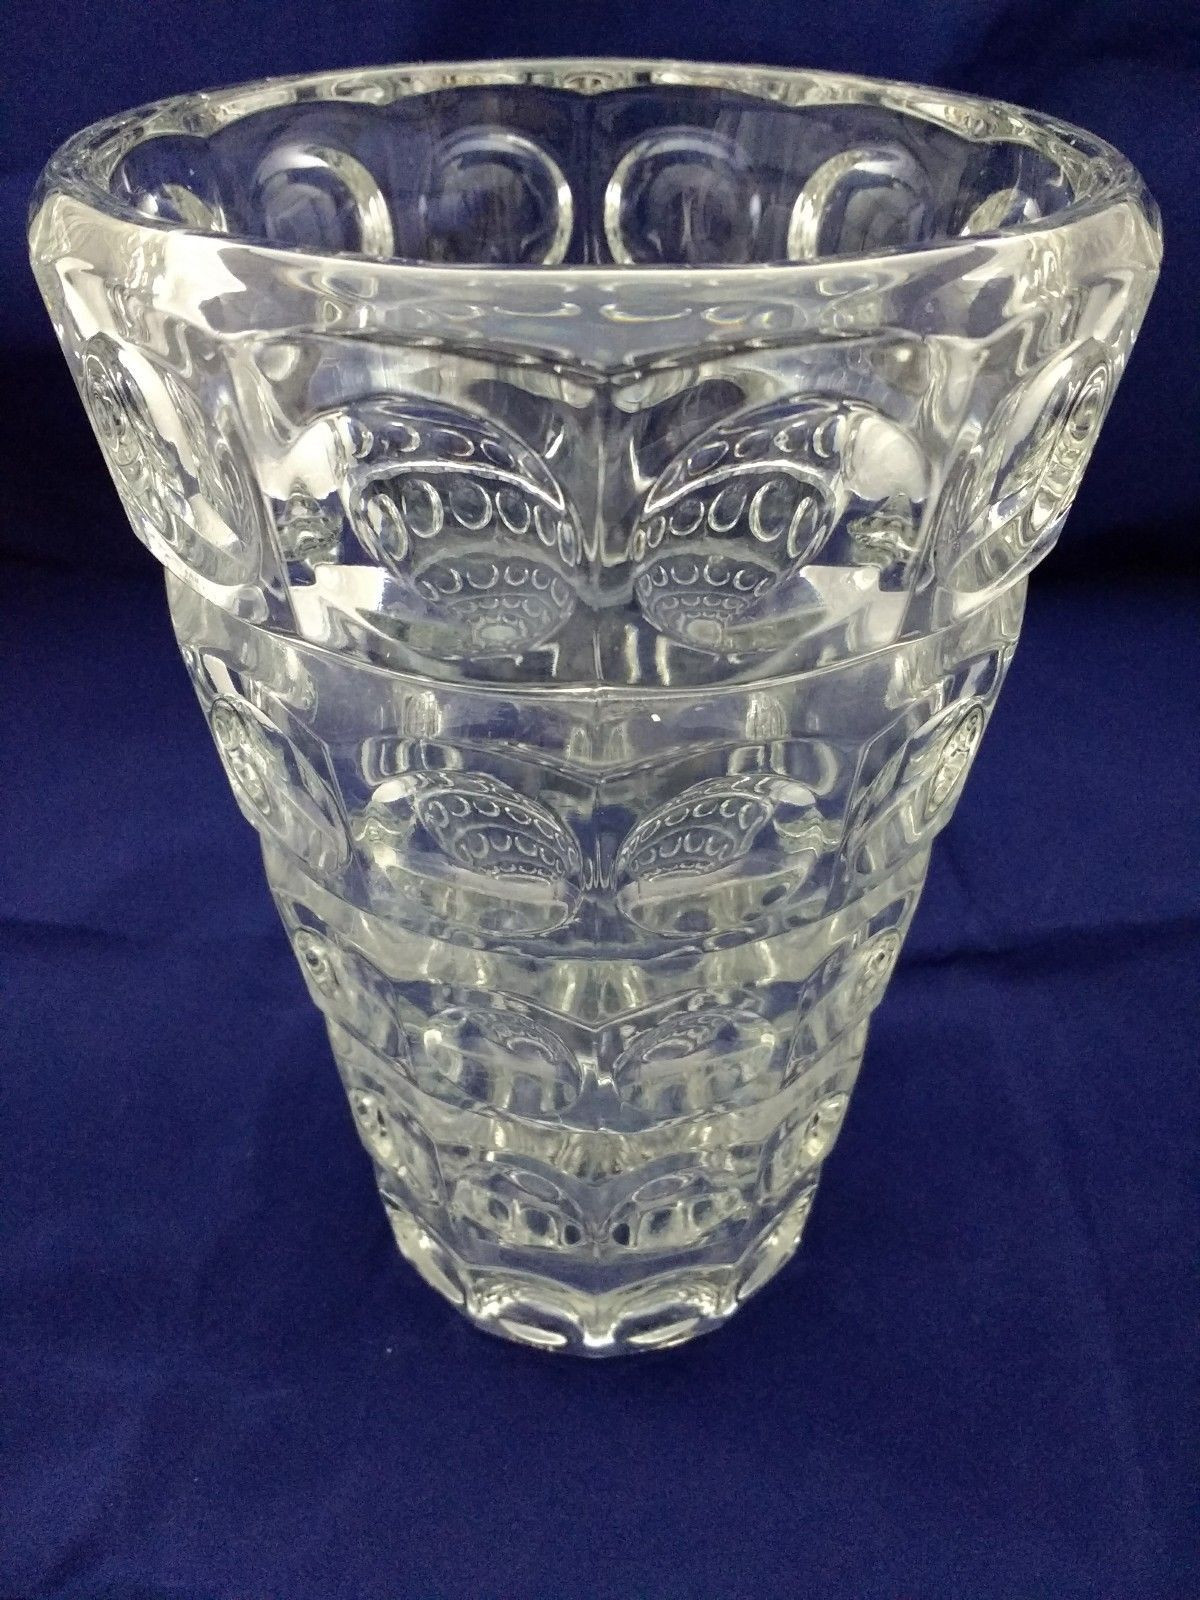 bubble bowl glass vase of sklo union rosice lense vase rosice sklo remarkable glass from a regarding sklo union rosice lense vase ebay